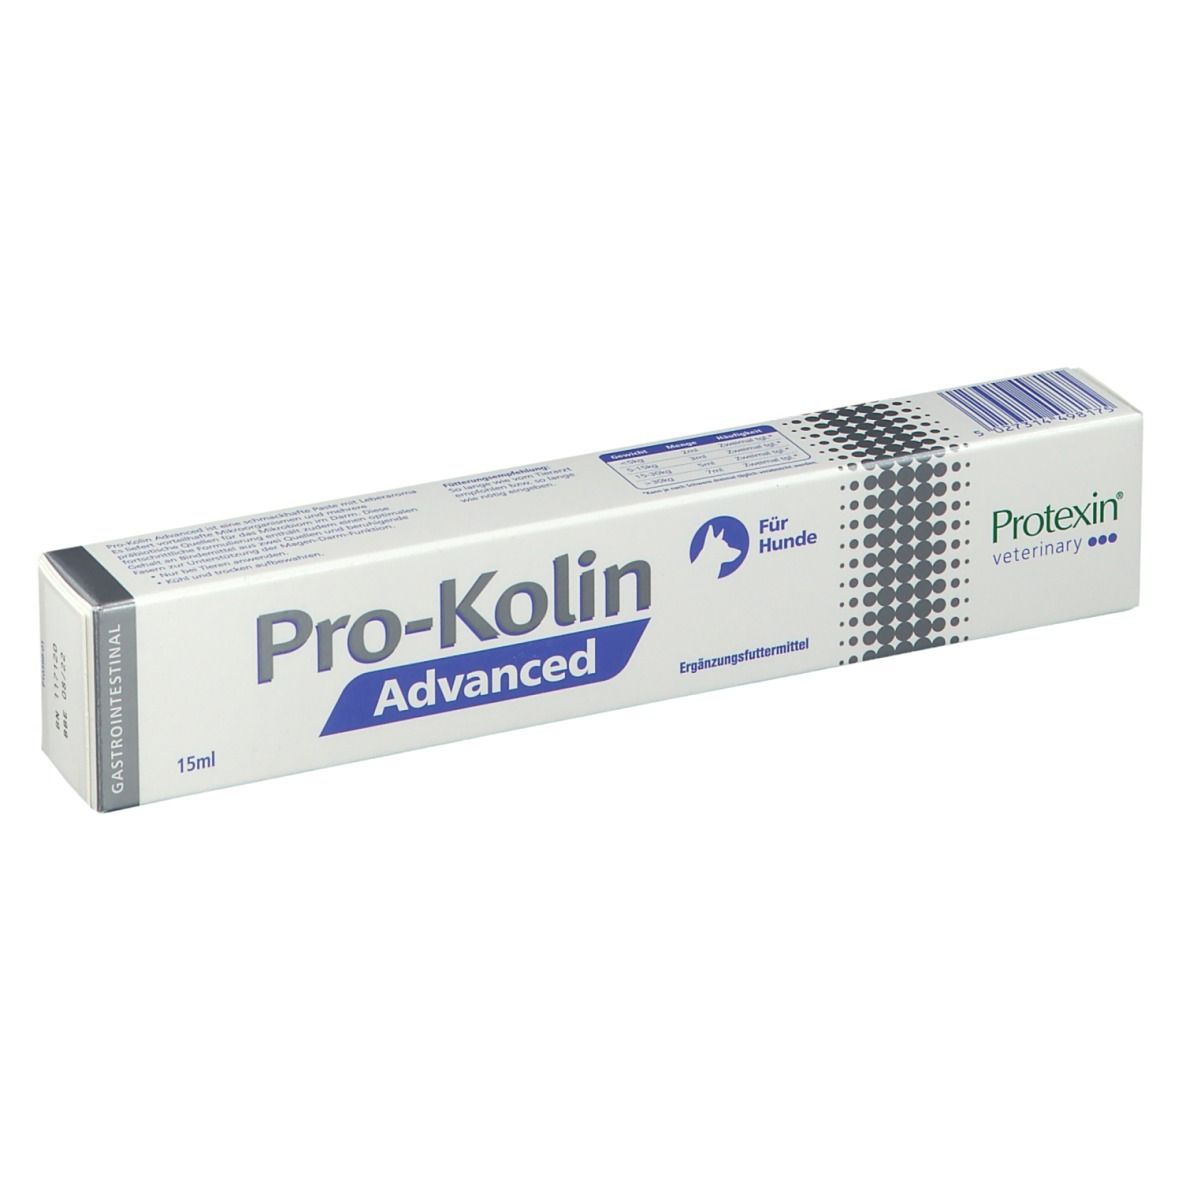 Pro-Kolin Advanced